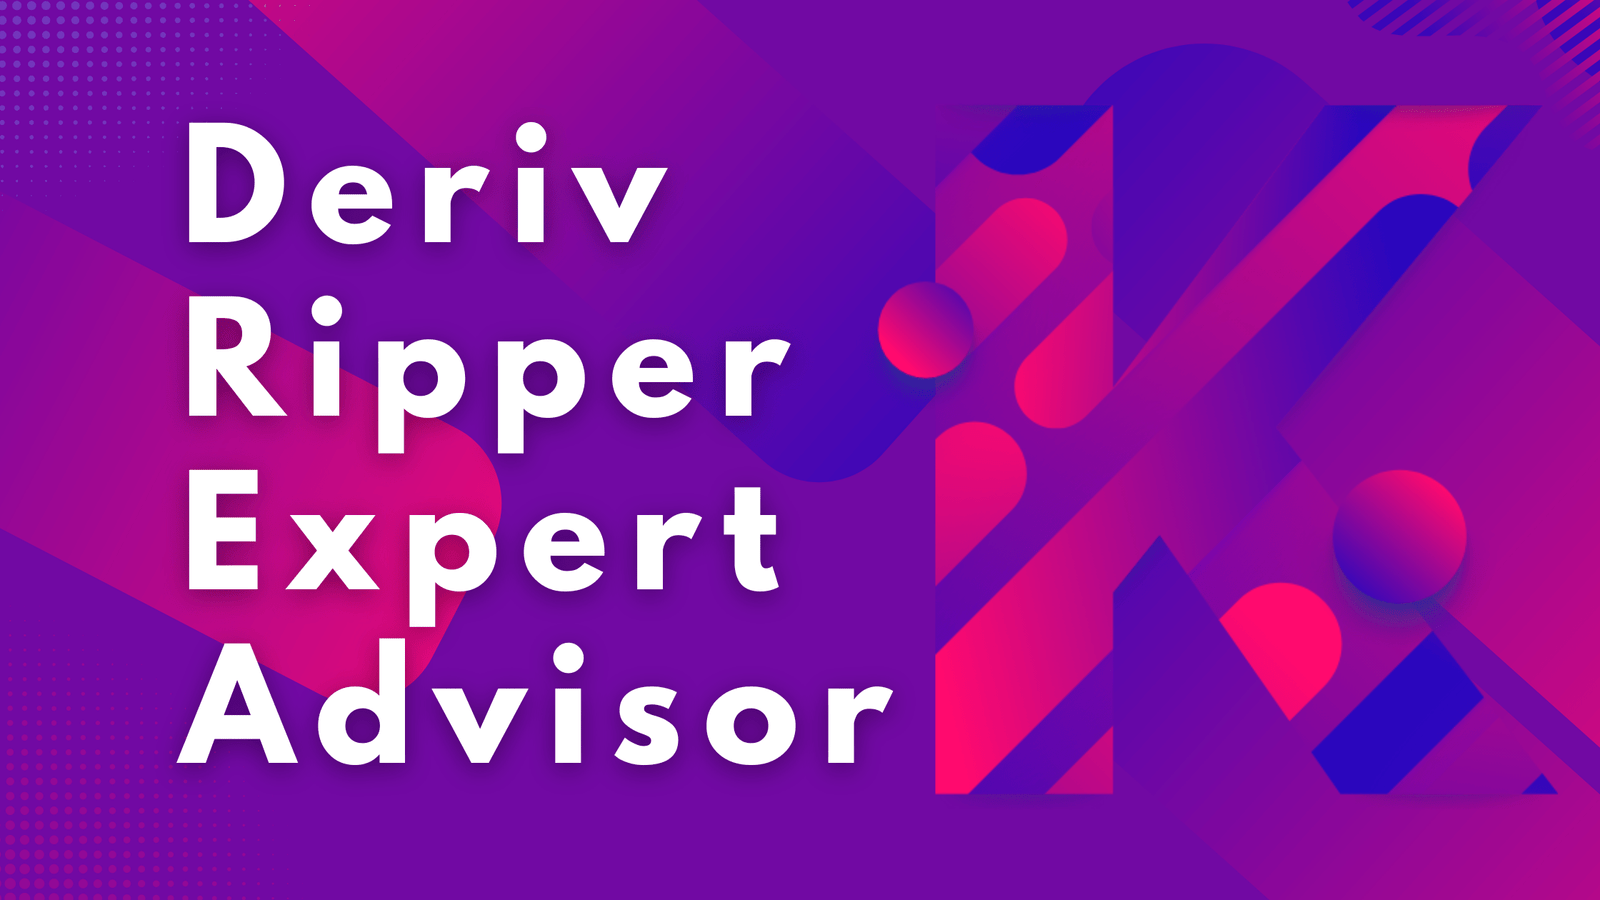 Download Deriv Ripper Expert Advisor 2.0